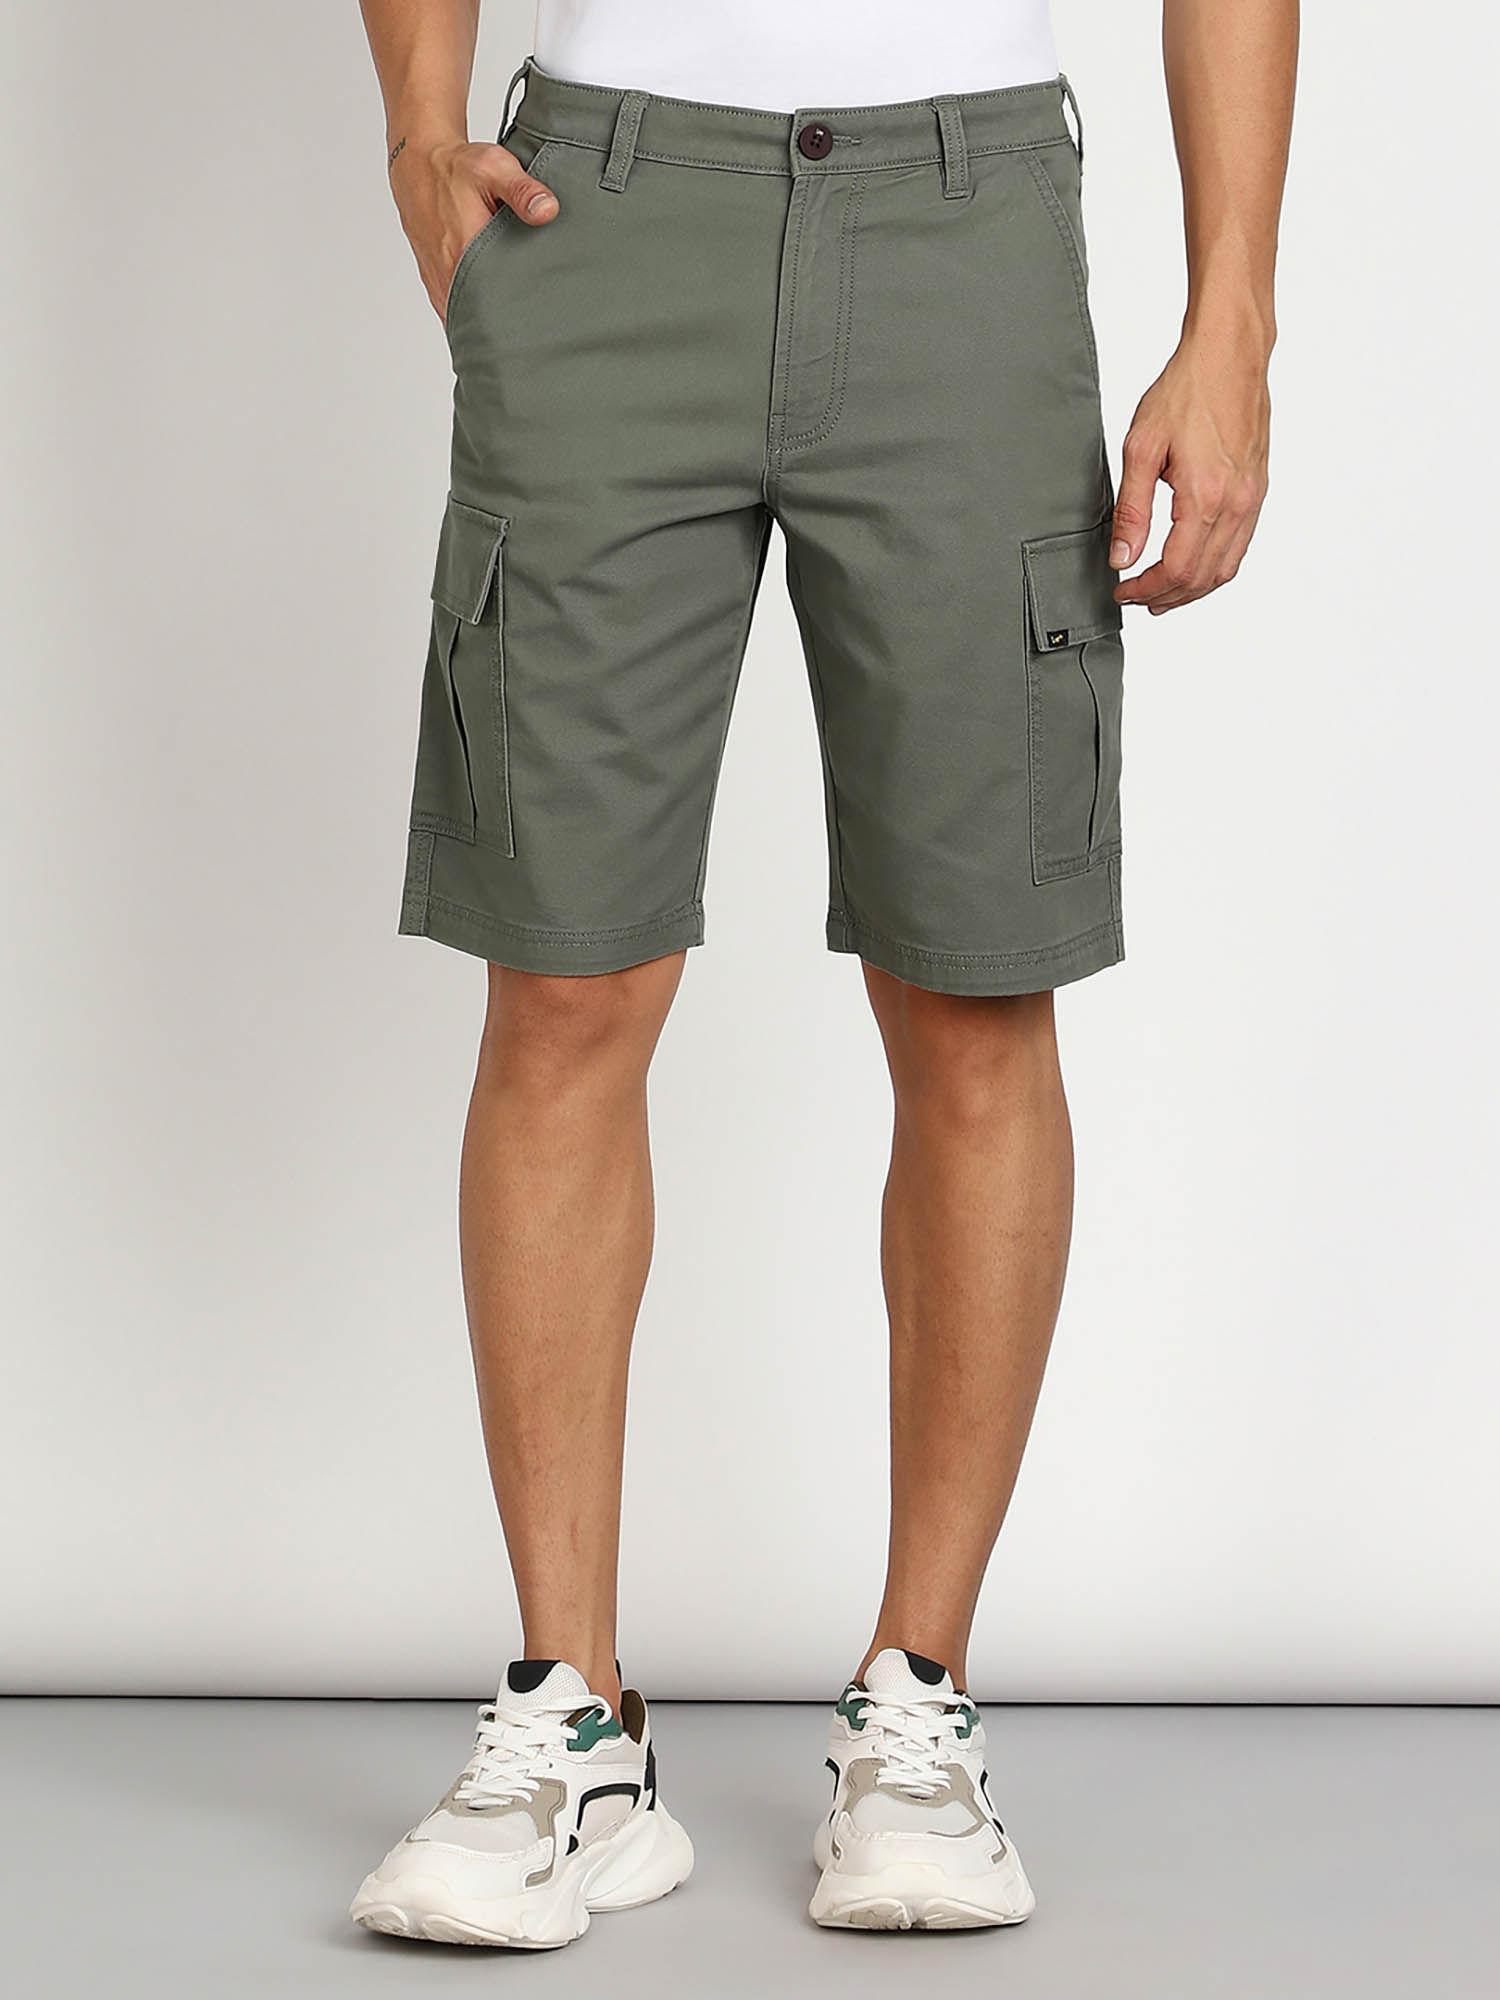 men's green cargo shorts